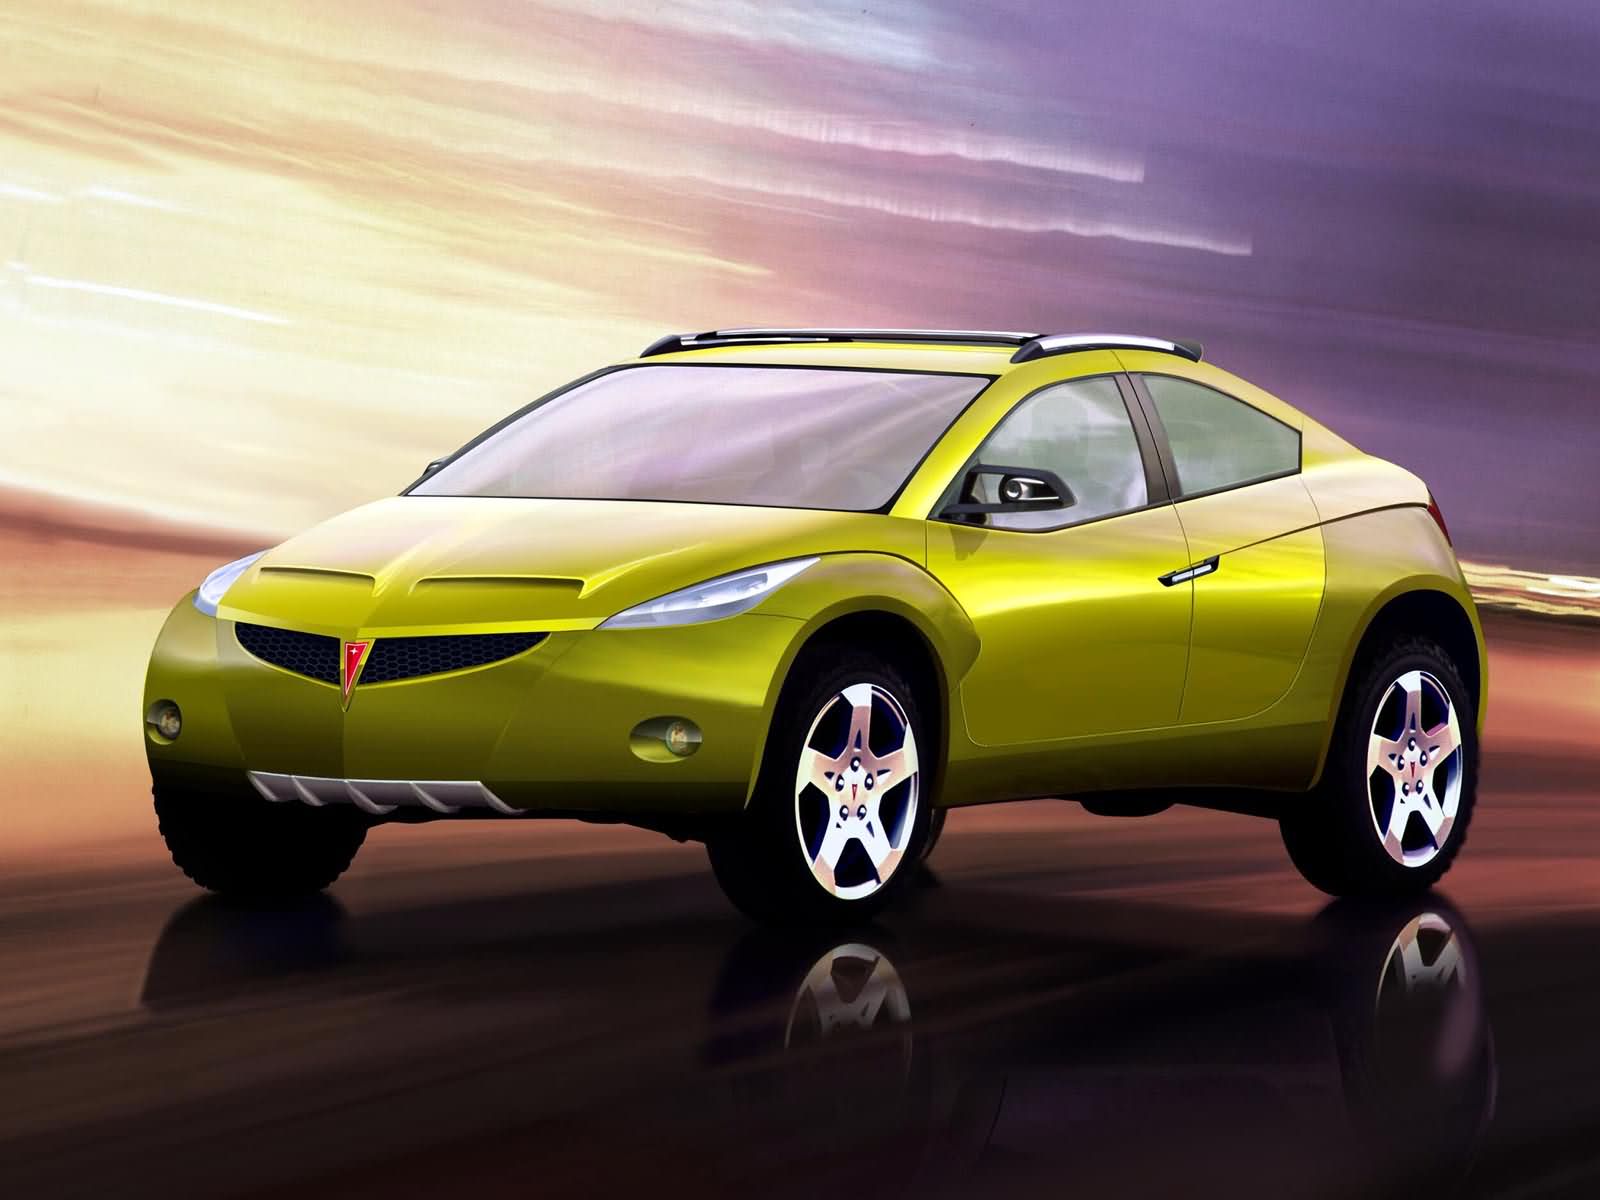 Pontiac REV Concept (2001) - Old Concept Cars